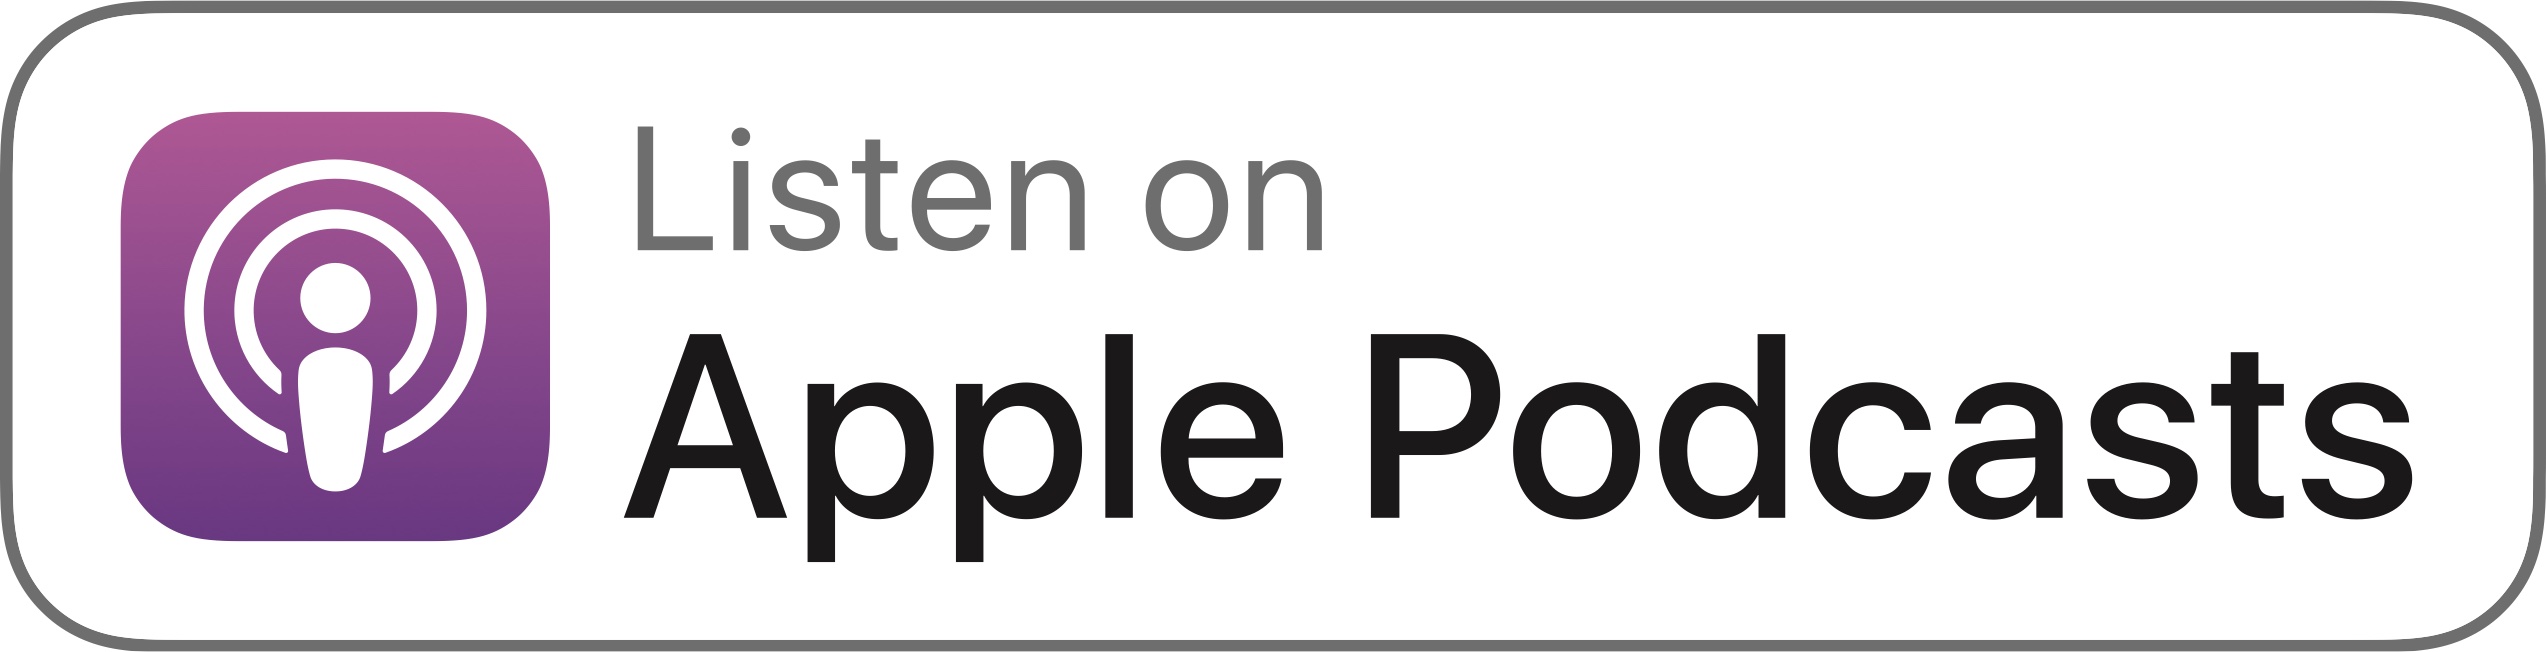 http://media.idownloadblog.com/wp-content/uploads/2017/04/Listen-on-Apple-Podcasts-badge.jpg